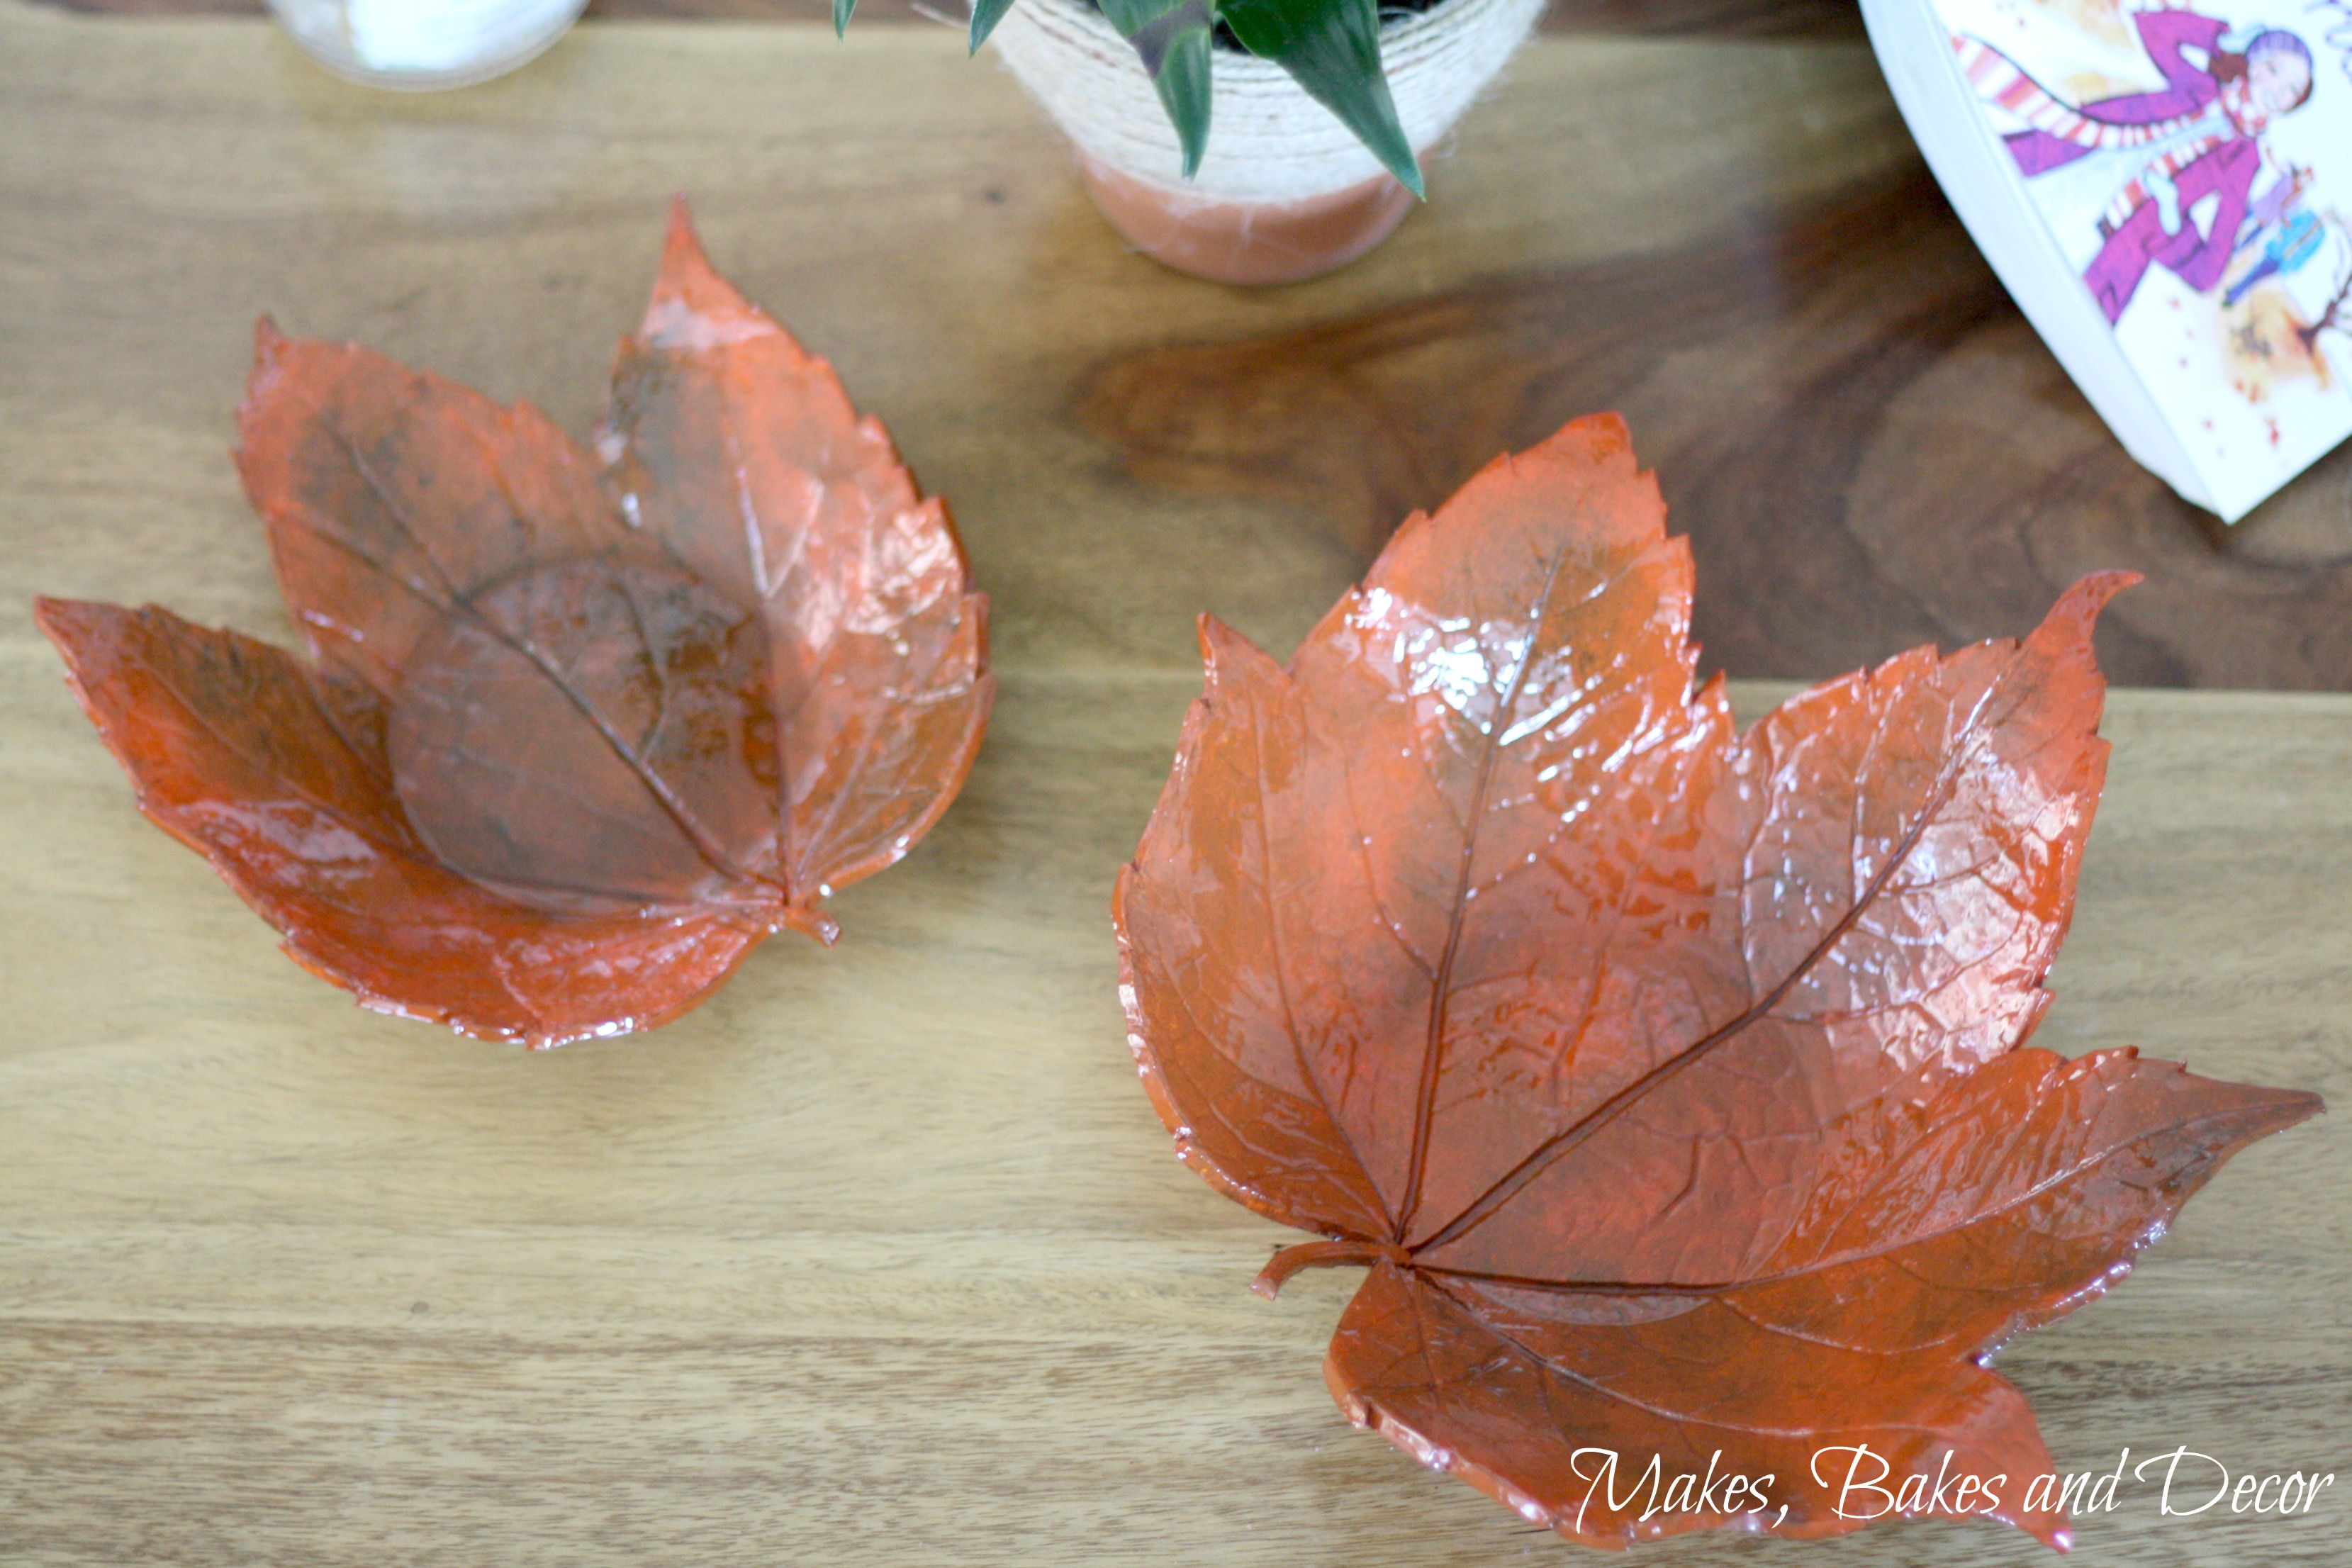 autumn leaf bowls